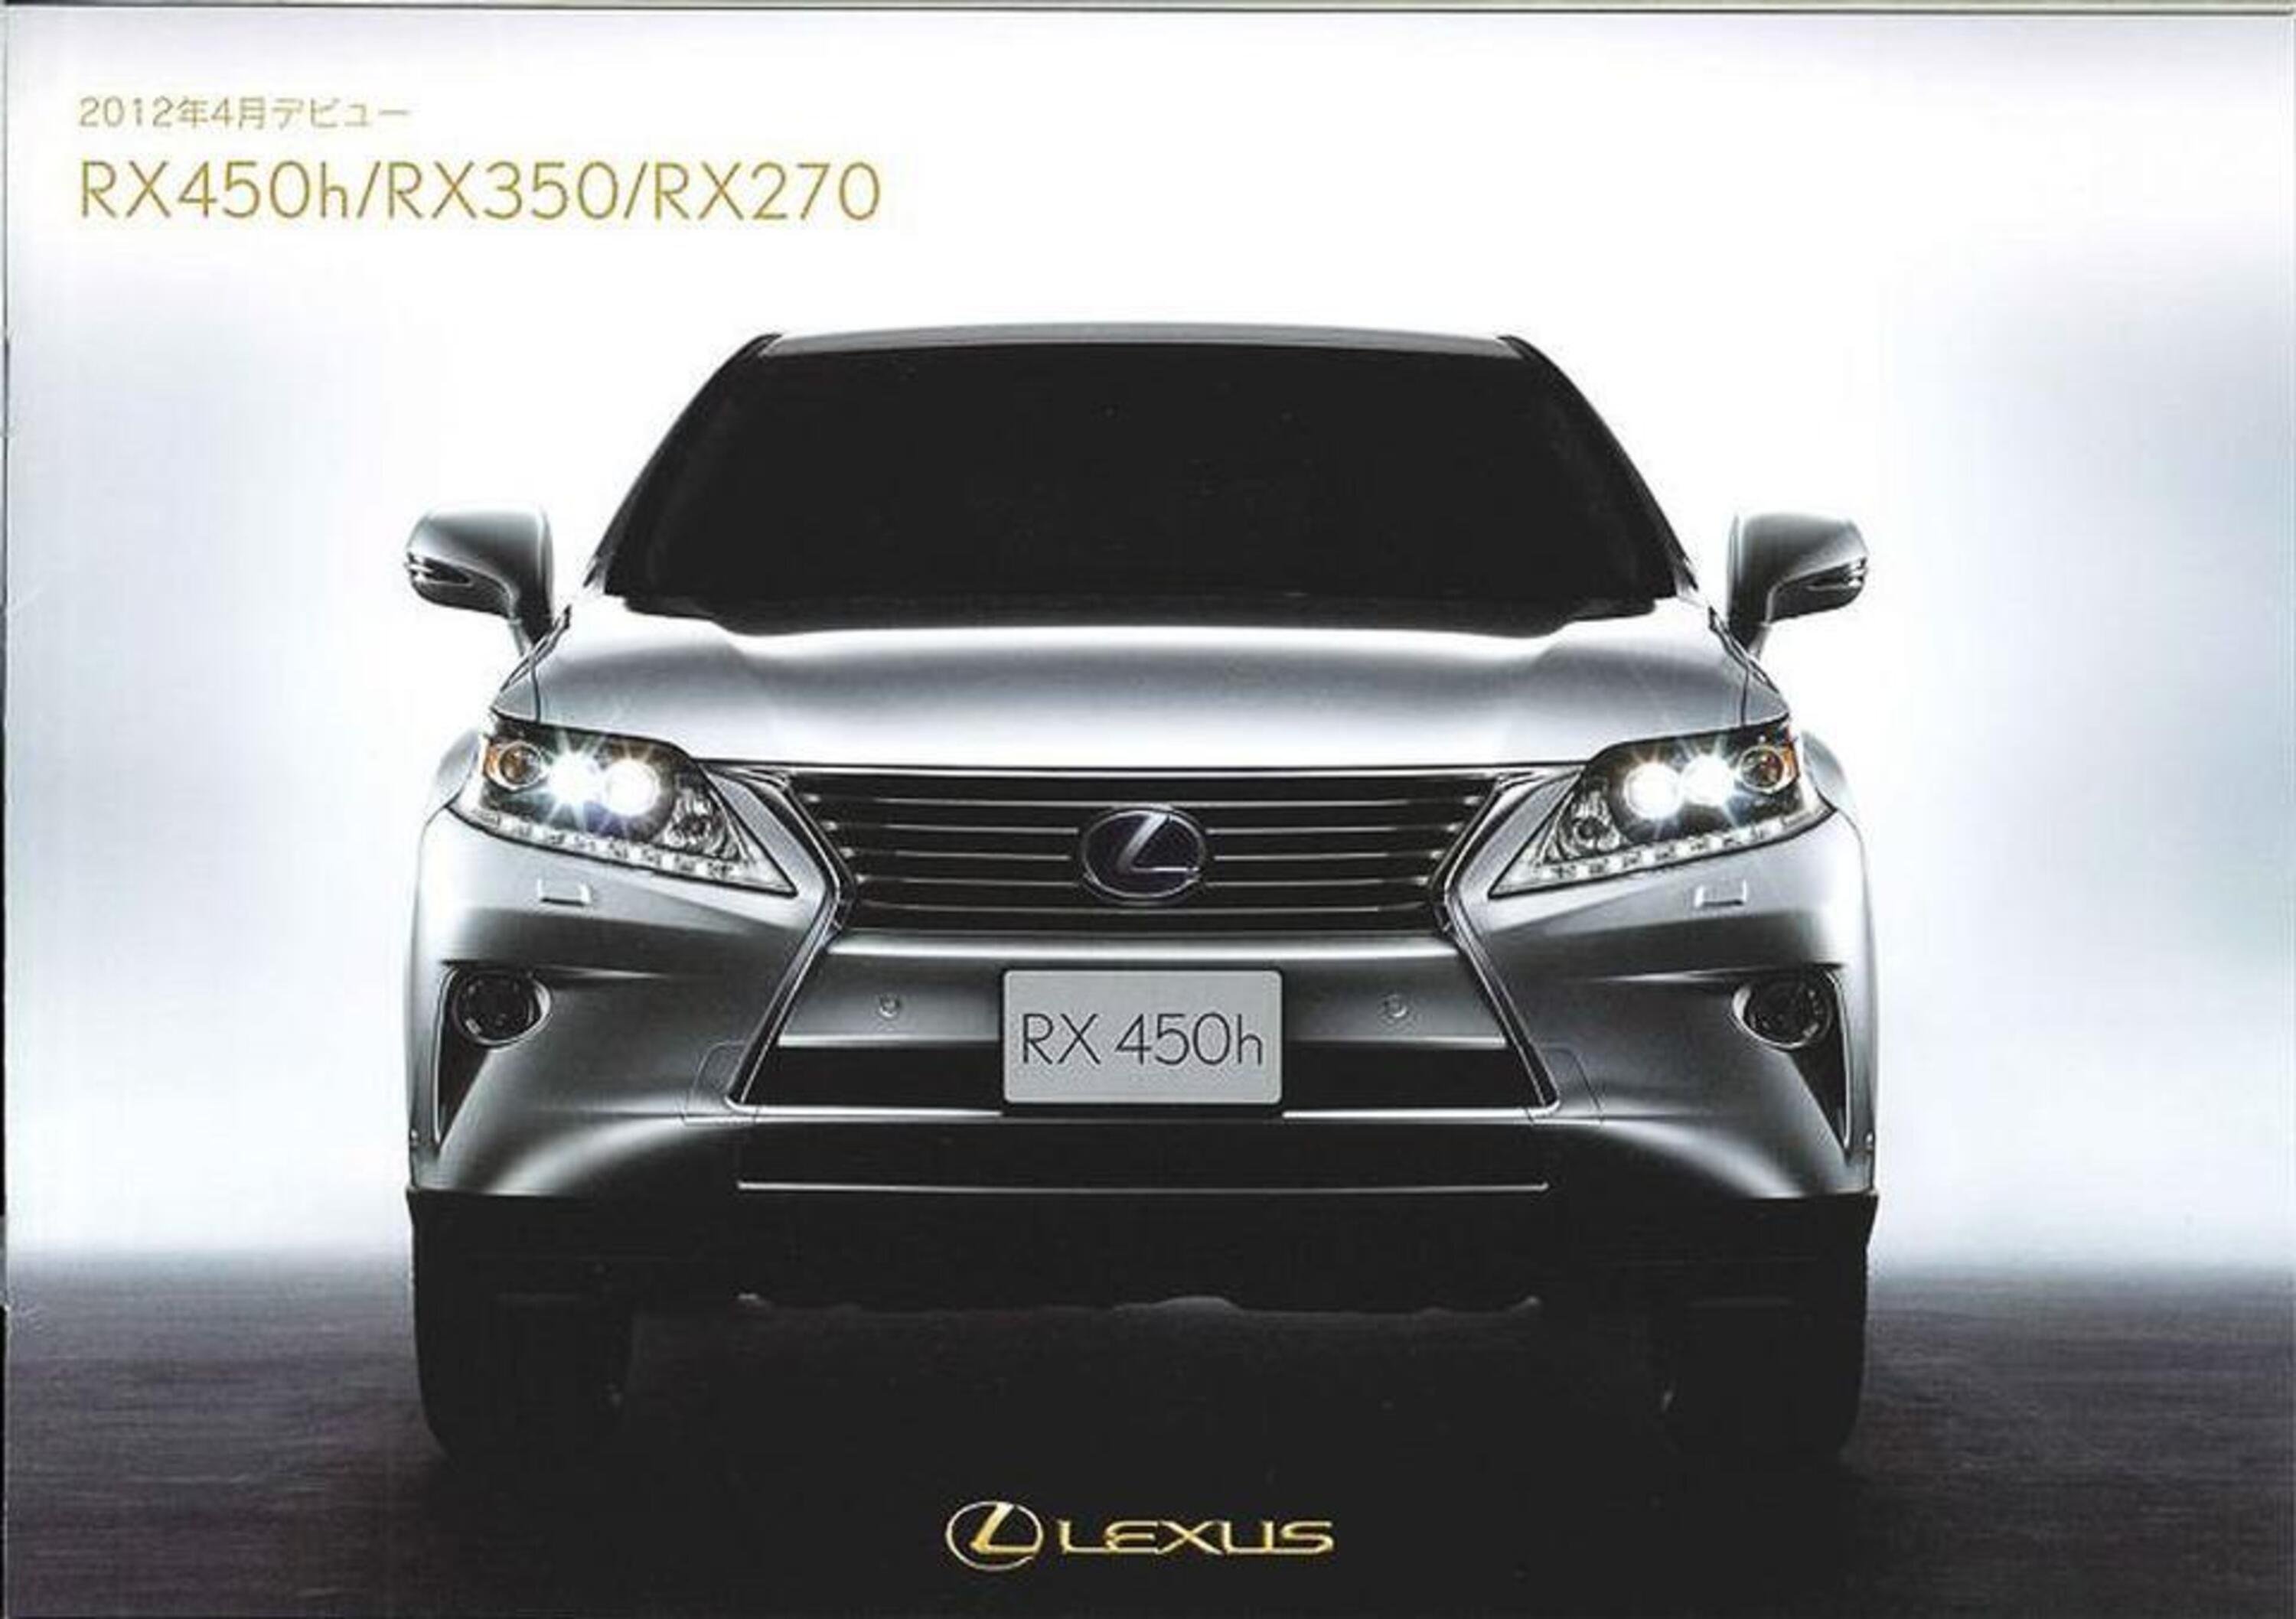 Lexus RX restyling: una scansione la anticipa